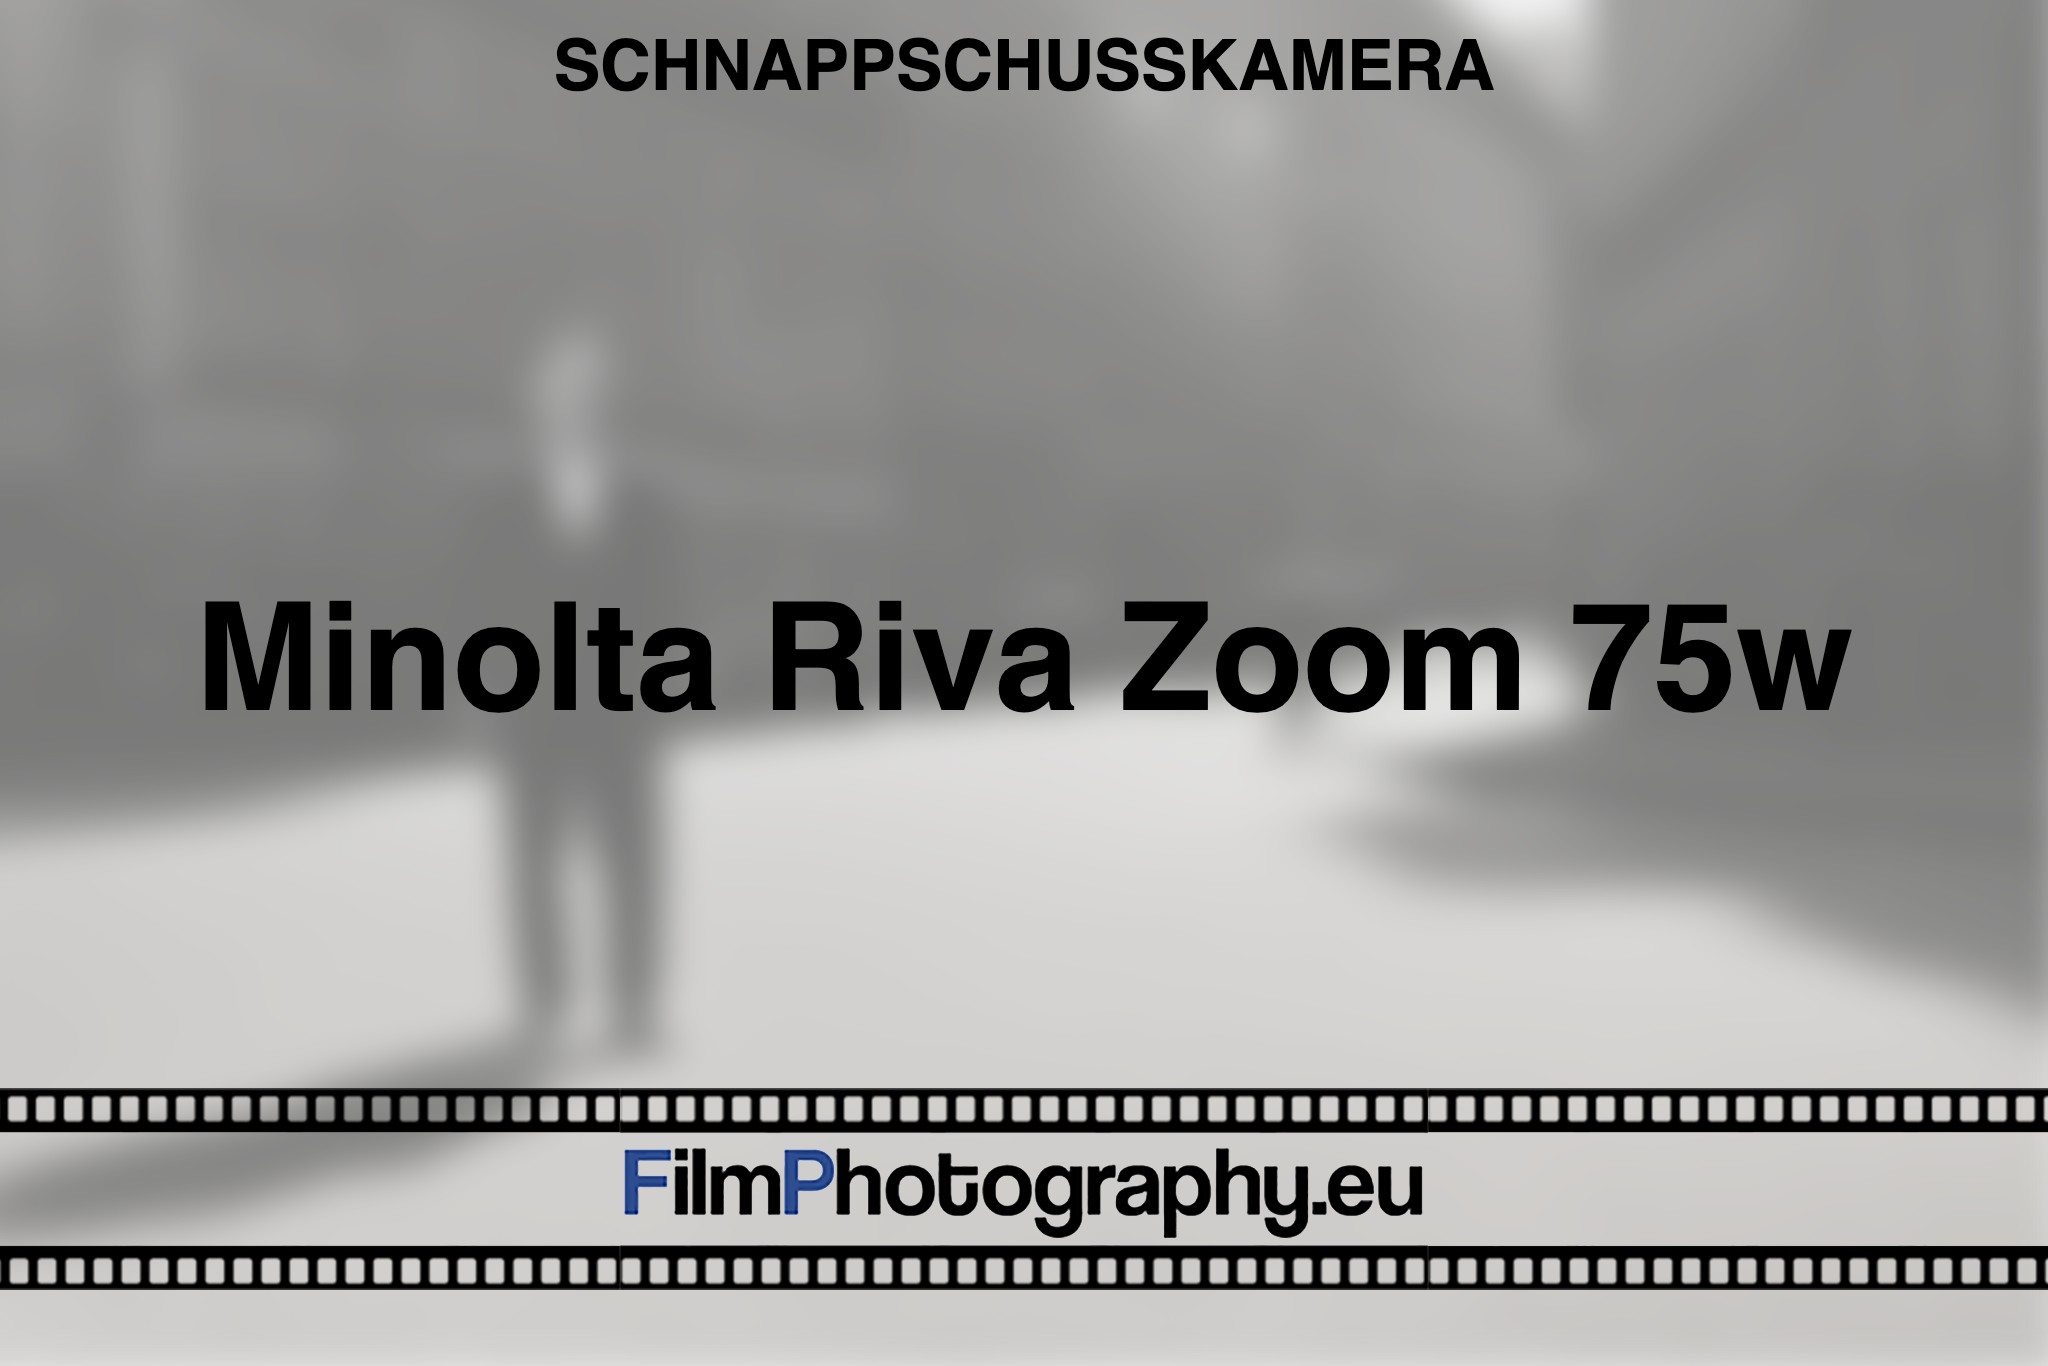 minolta-riva-zoom-75w-schnappschusskamera-bnv